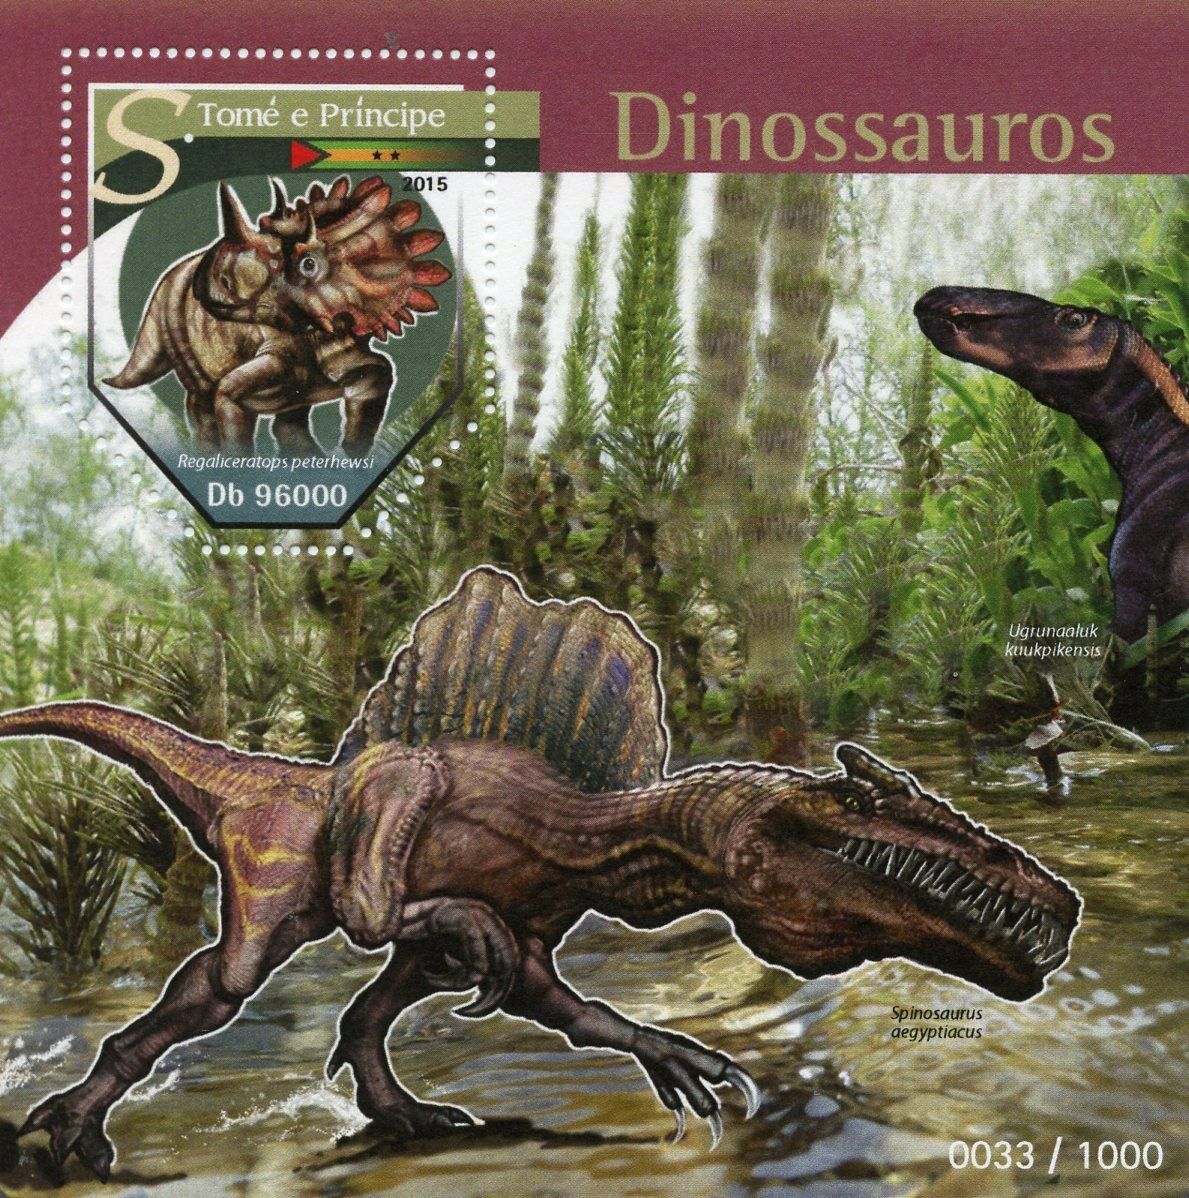 Sao Tome & Principe 2015 MNH Dinosaurs 1v S/S Regaliceratops peterhewsi Stamps